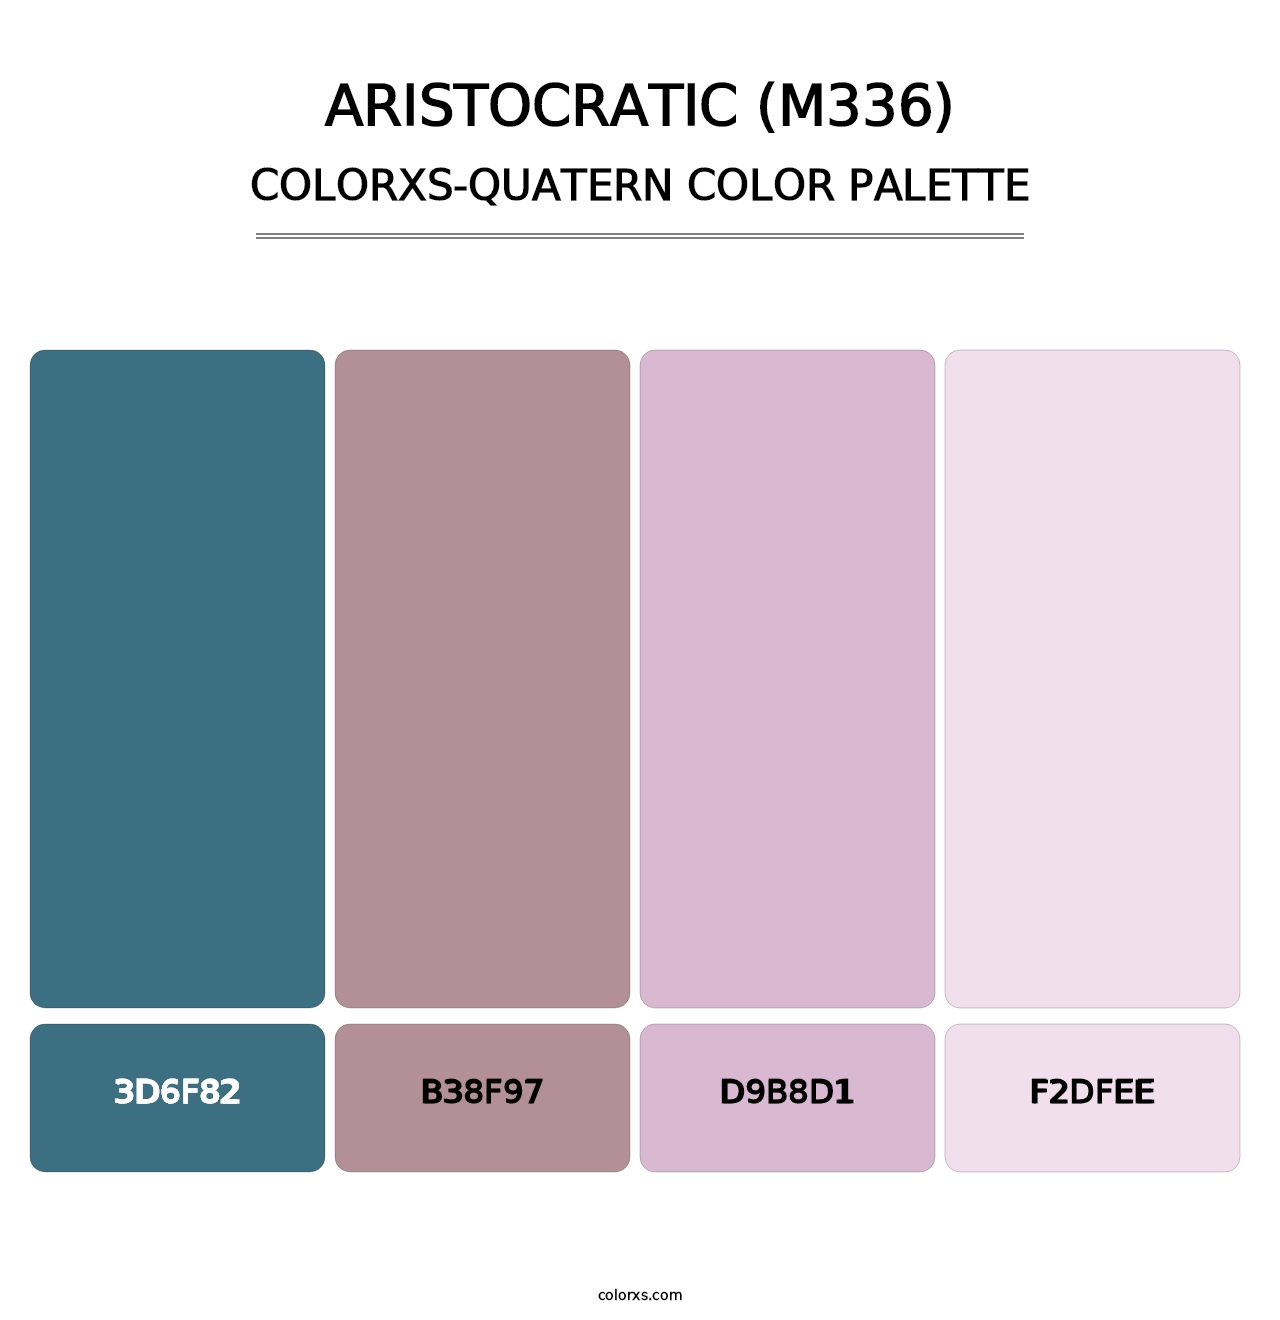 Aristocratic (M336) - Colorxs Quatern Palette